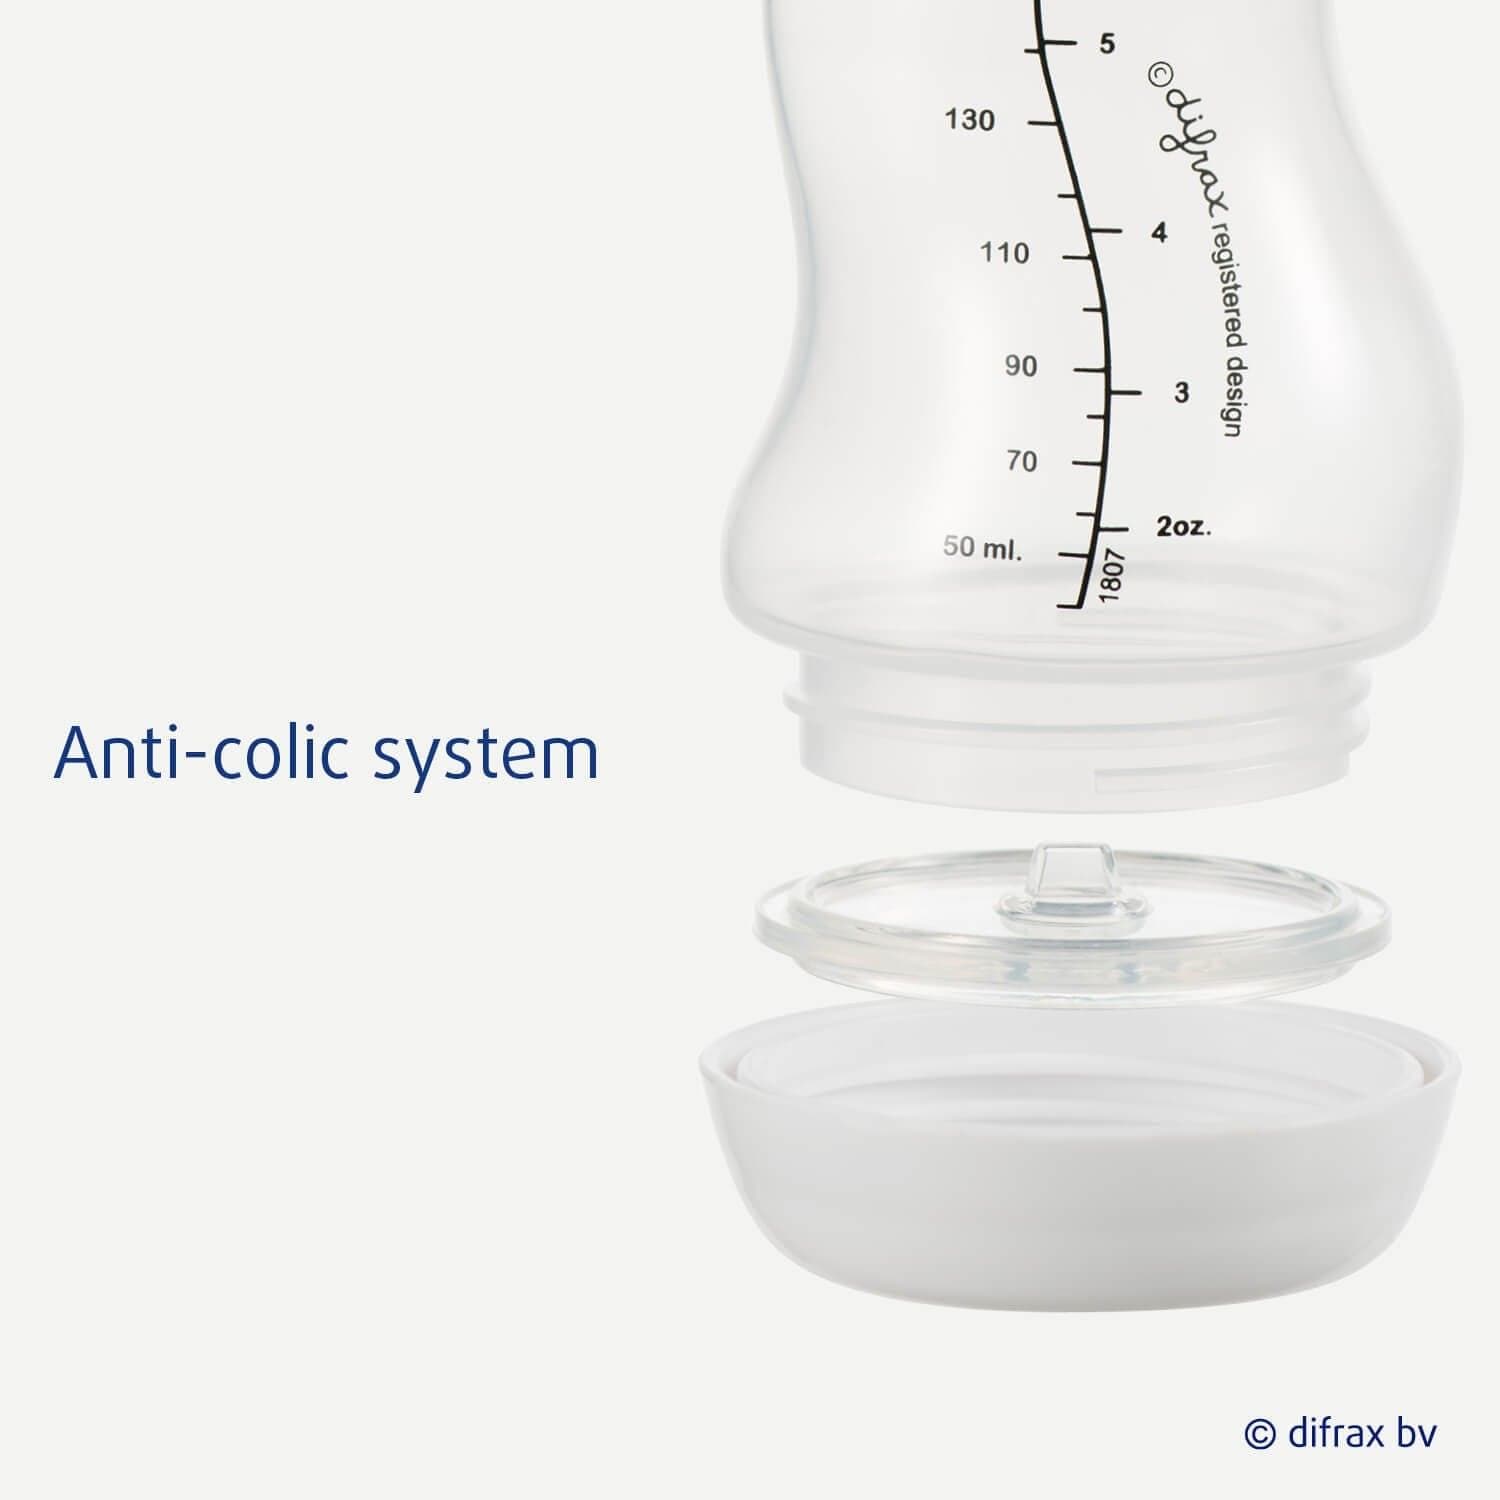 Anti-colic system